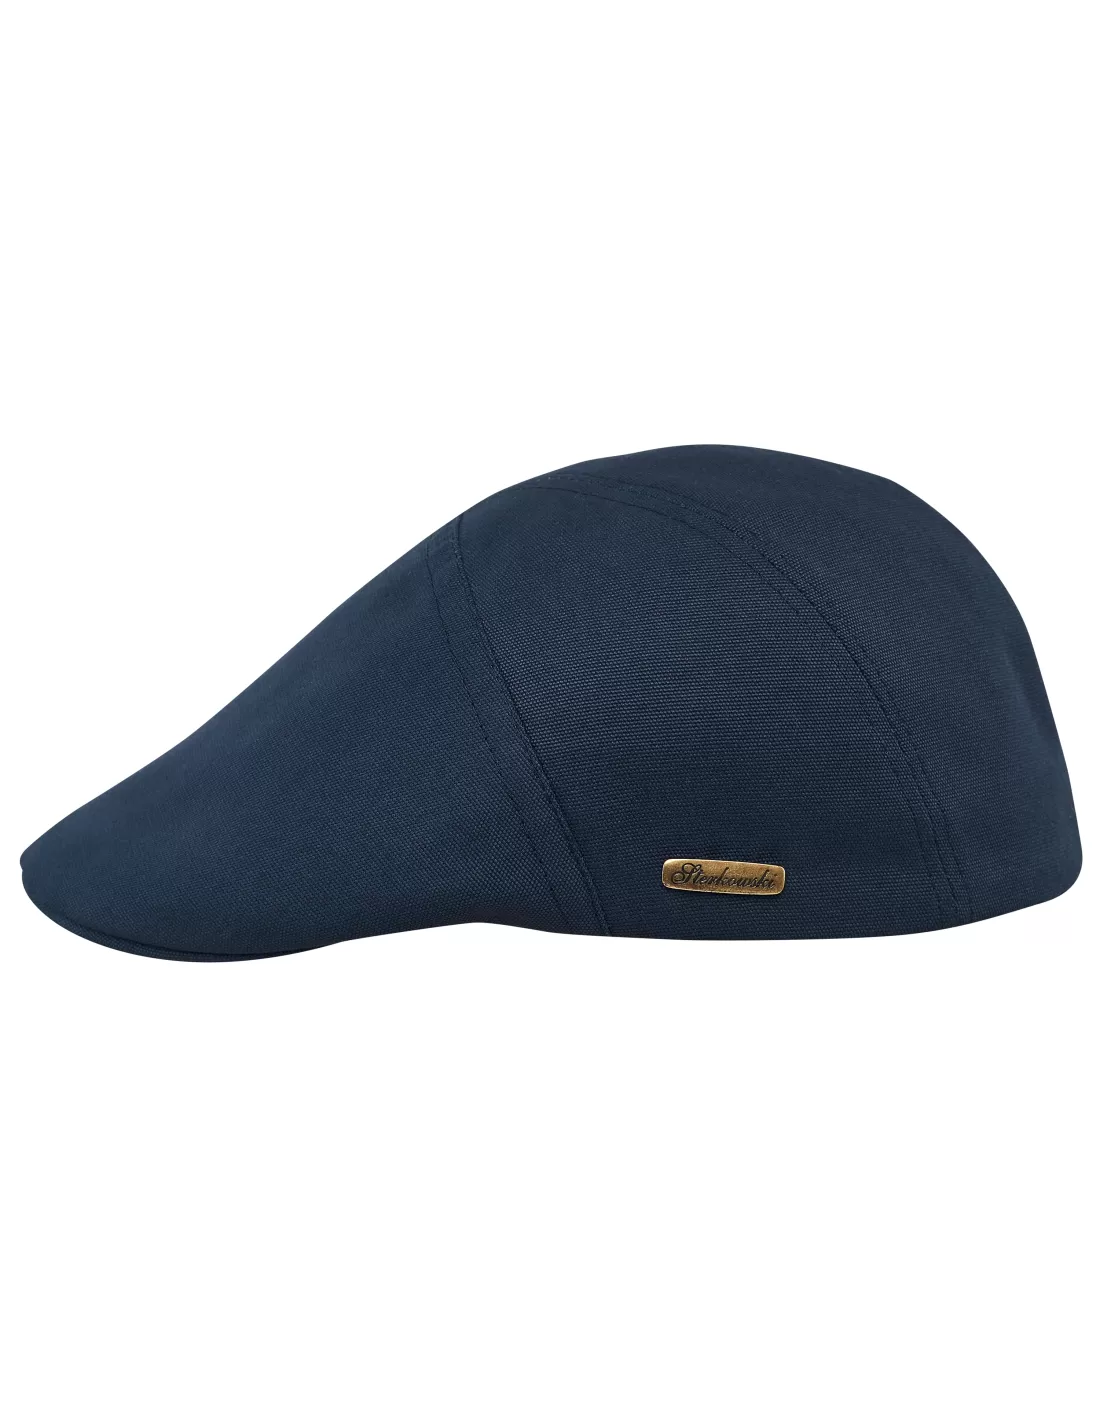 Elegant, timeless caps & hats